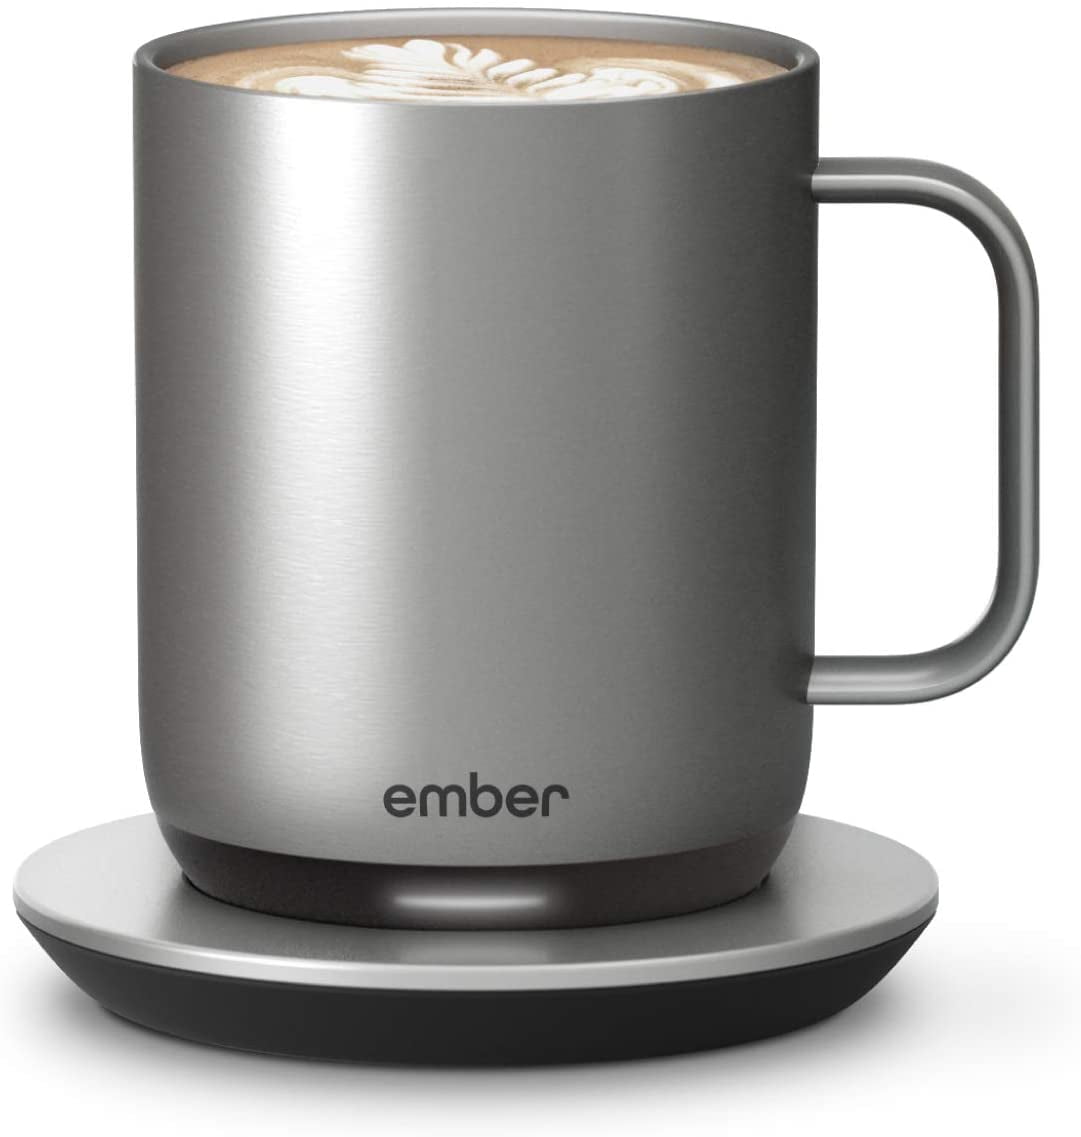 Ember Temperature Control Smart Mug 10 Ounce White App Controlled Heated Coffee Mug 1-hr Battery Life 